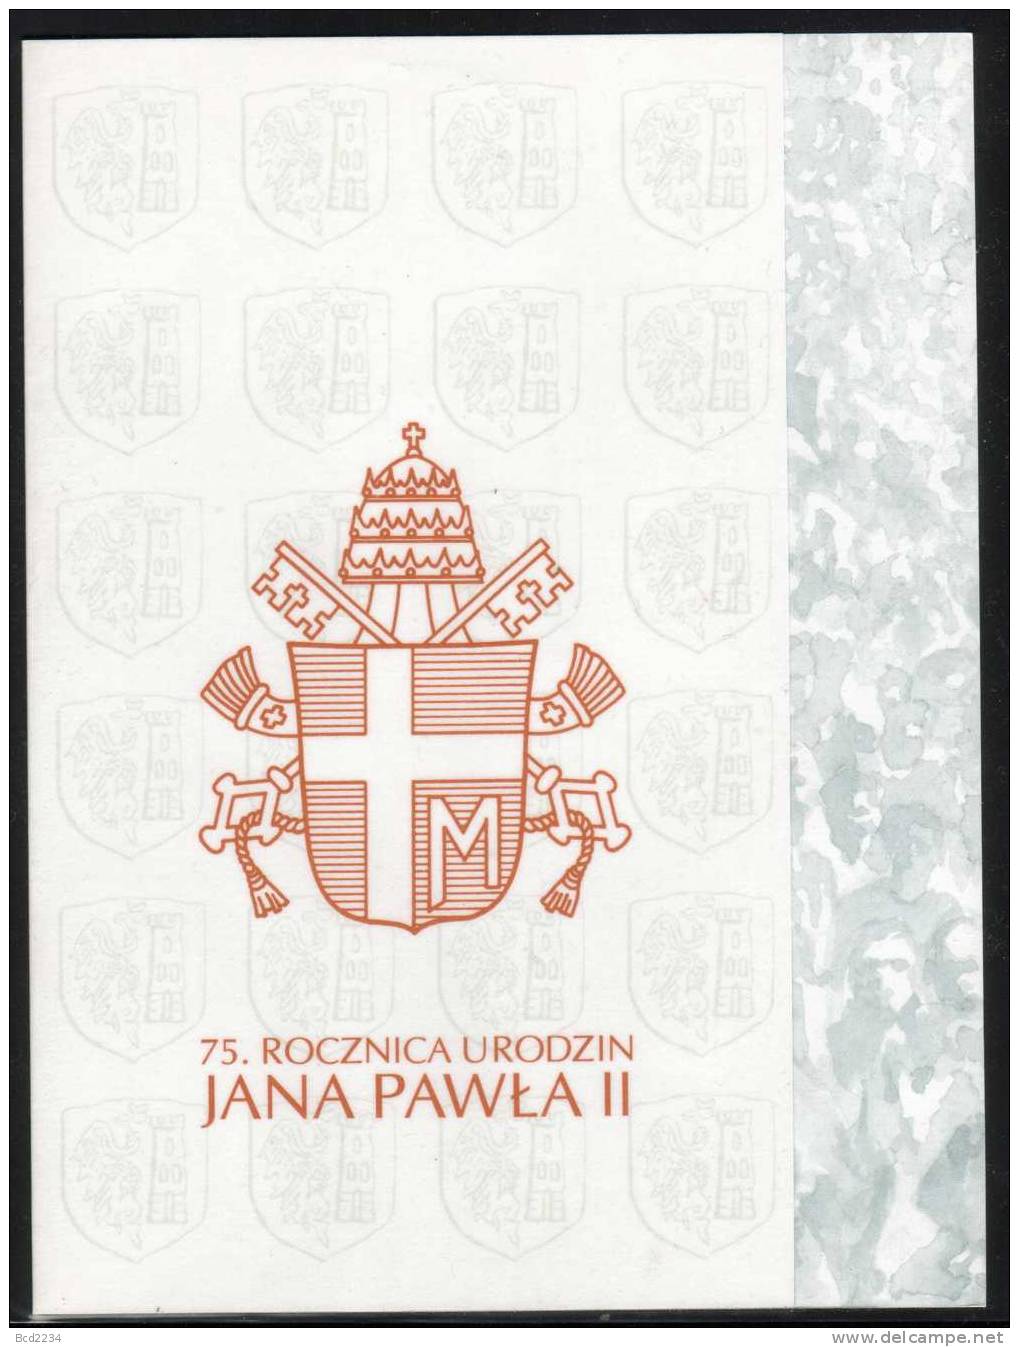 POLAND FDC 1995 POPE JOHN PAUL JPII JP2 75TH BIRTHDAY PRESENTATION FOLDER FROM HIS BIRTH TOWN WADOWICE - FDC